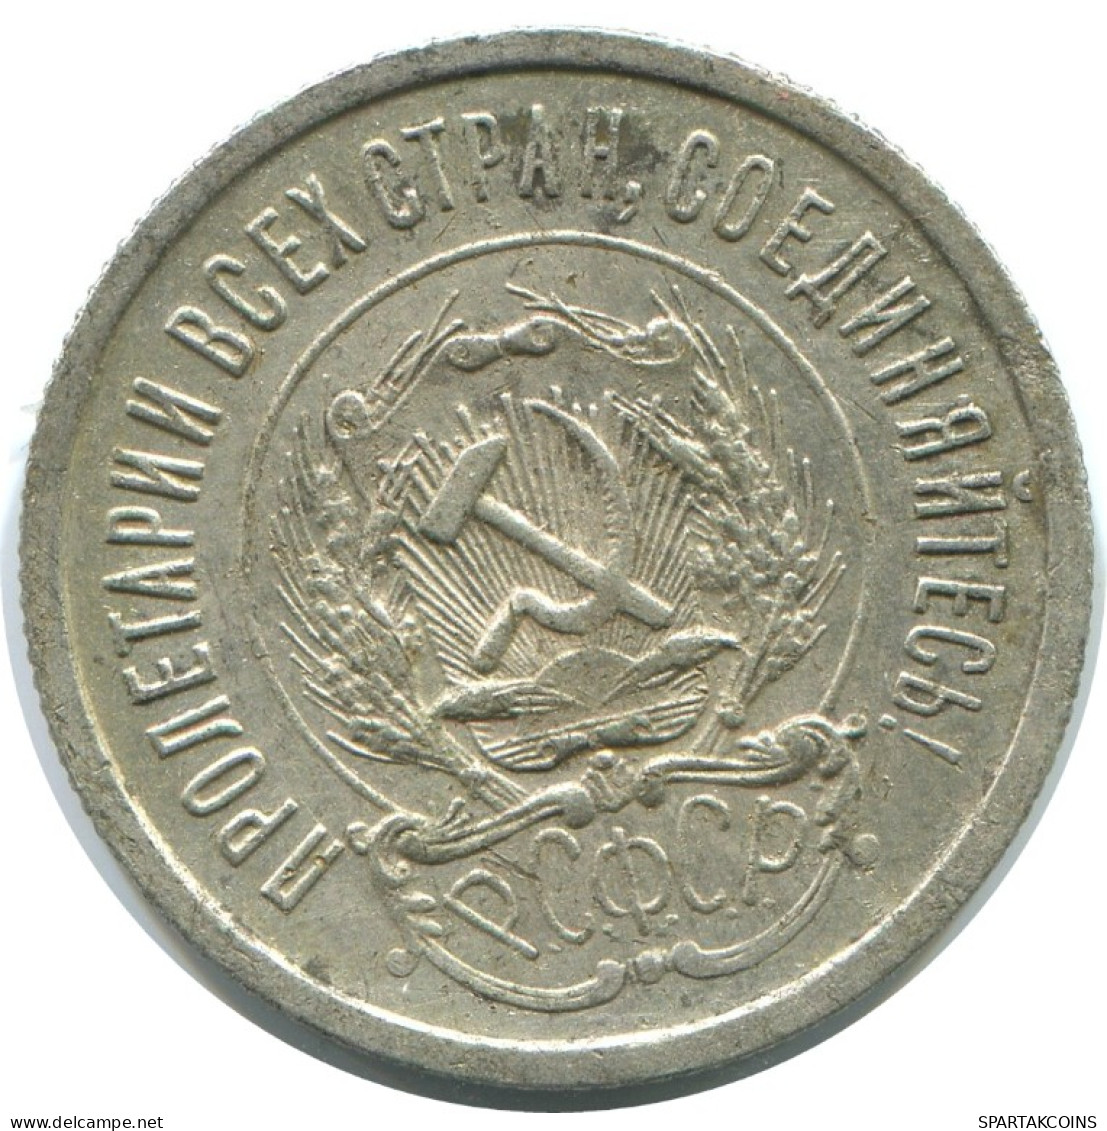 20 KOPEKS 1923 RUSSIA RSFSR SILVER Coin HIGH GRADE #AF504.4.U.A - Russie